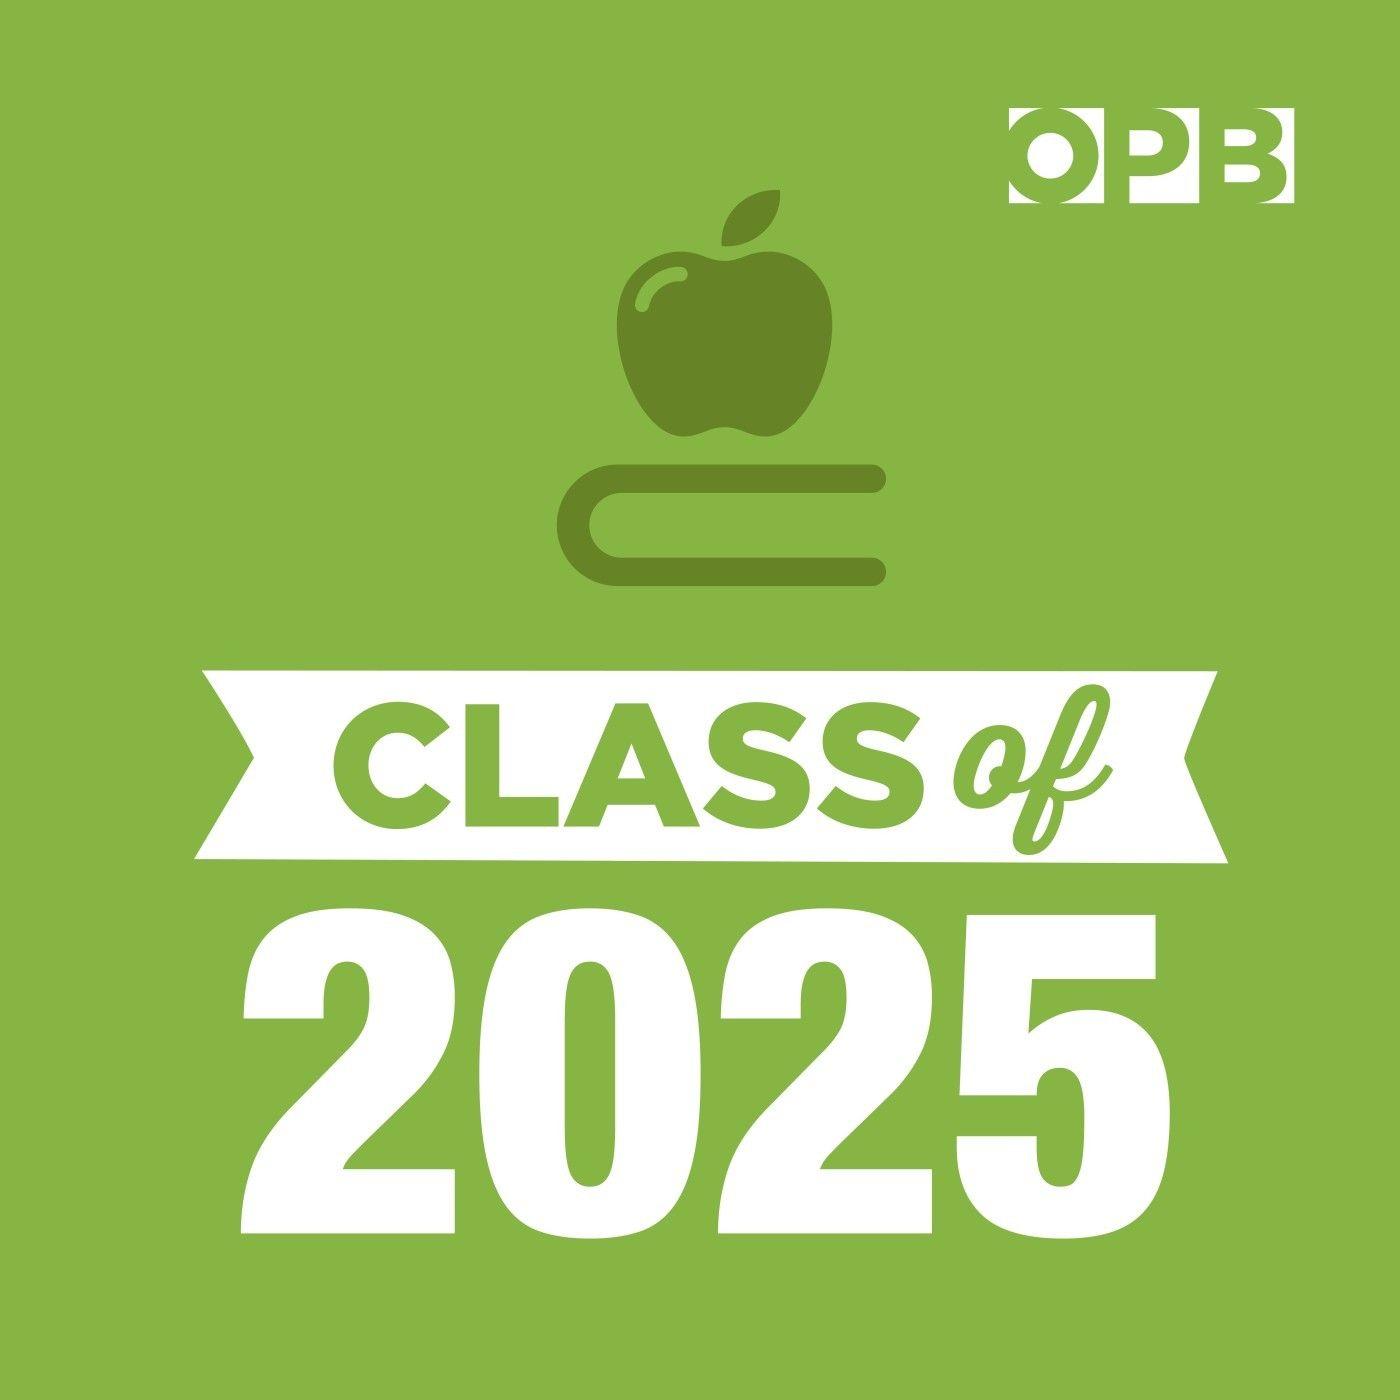 KOPB Logo - OPB's Class of 2025 : NPR